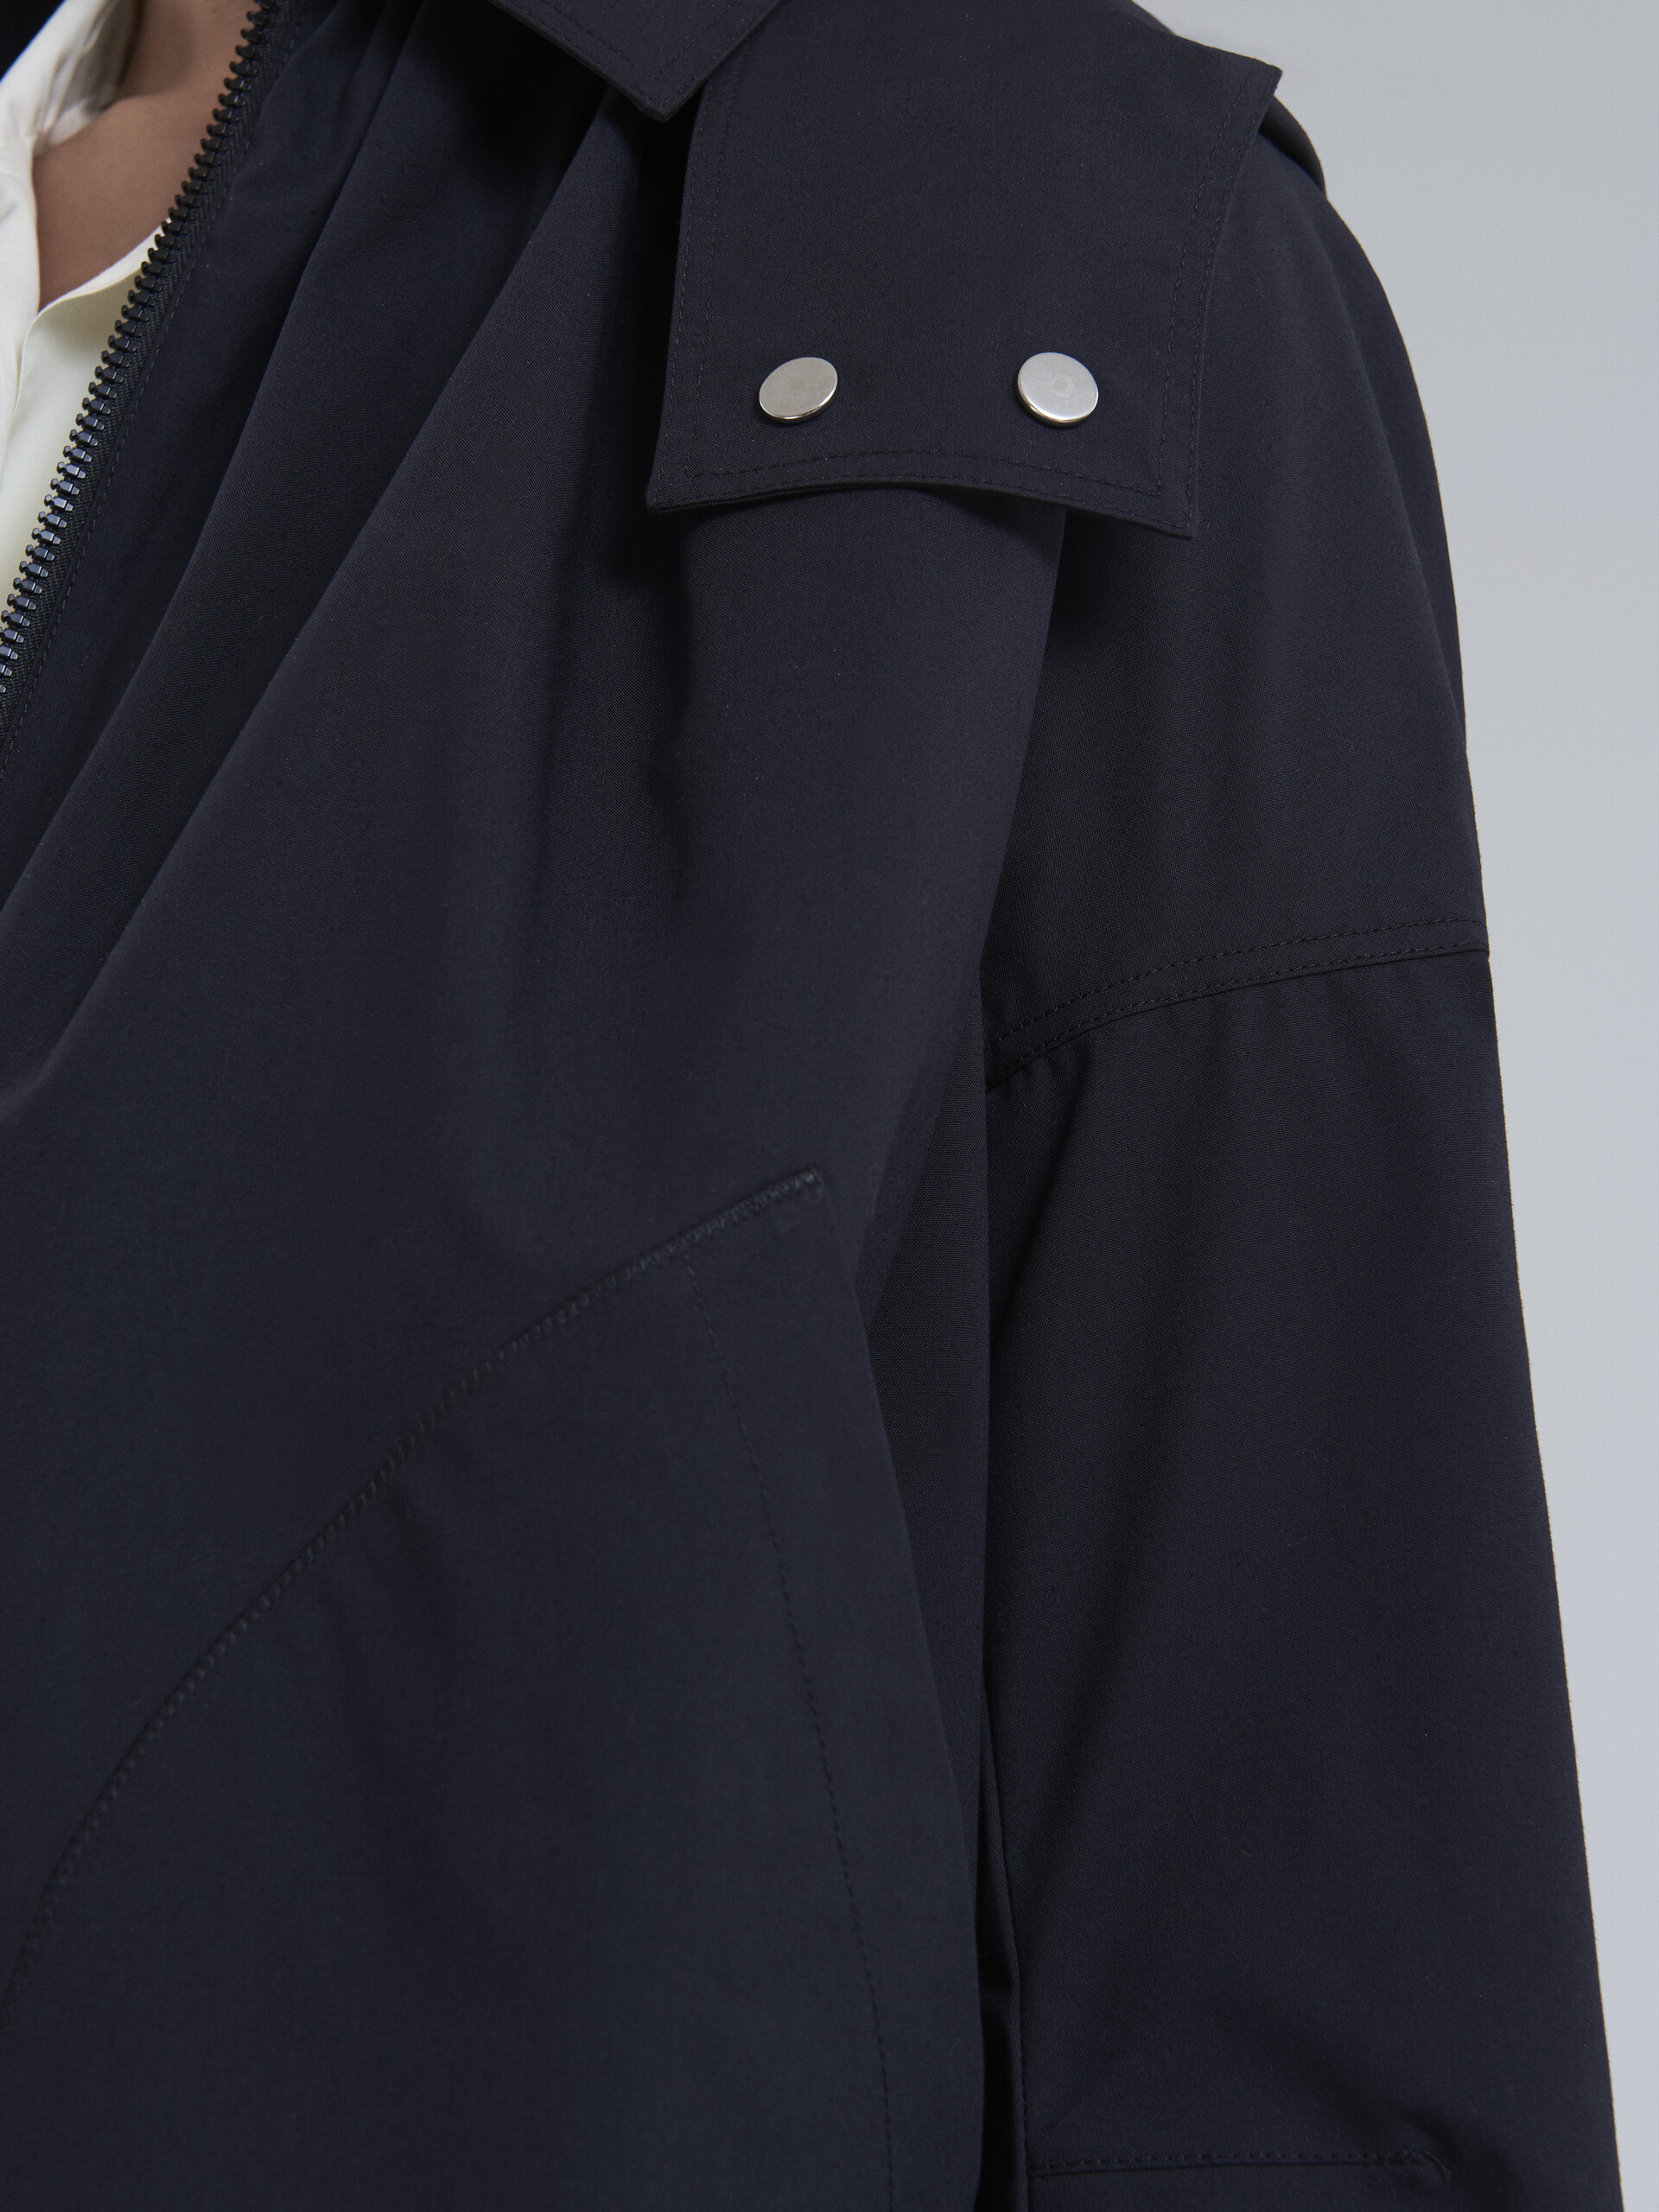 Technical cotton jacket with kimono sleeves and hood - Jackets - Image 5